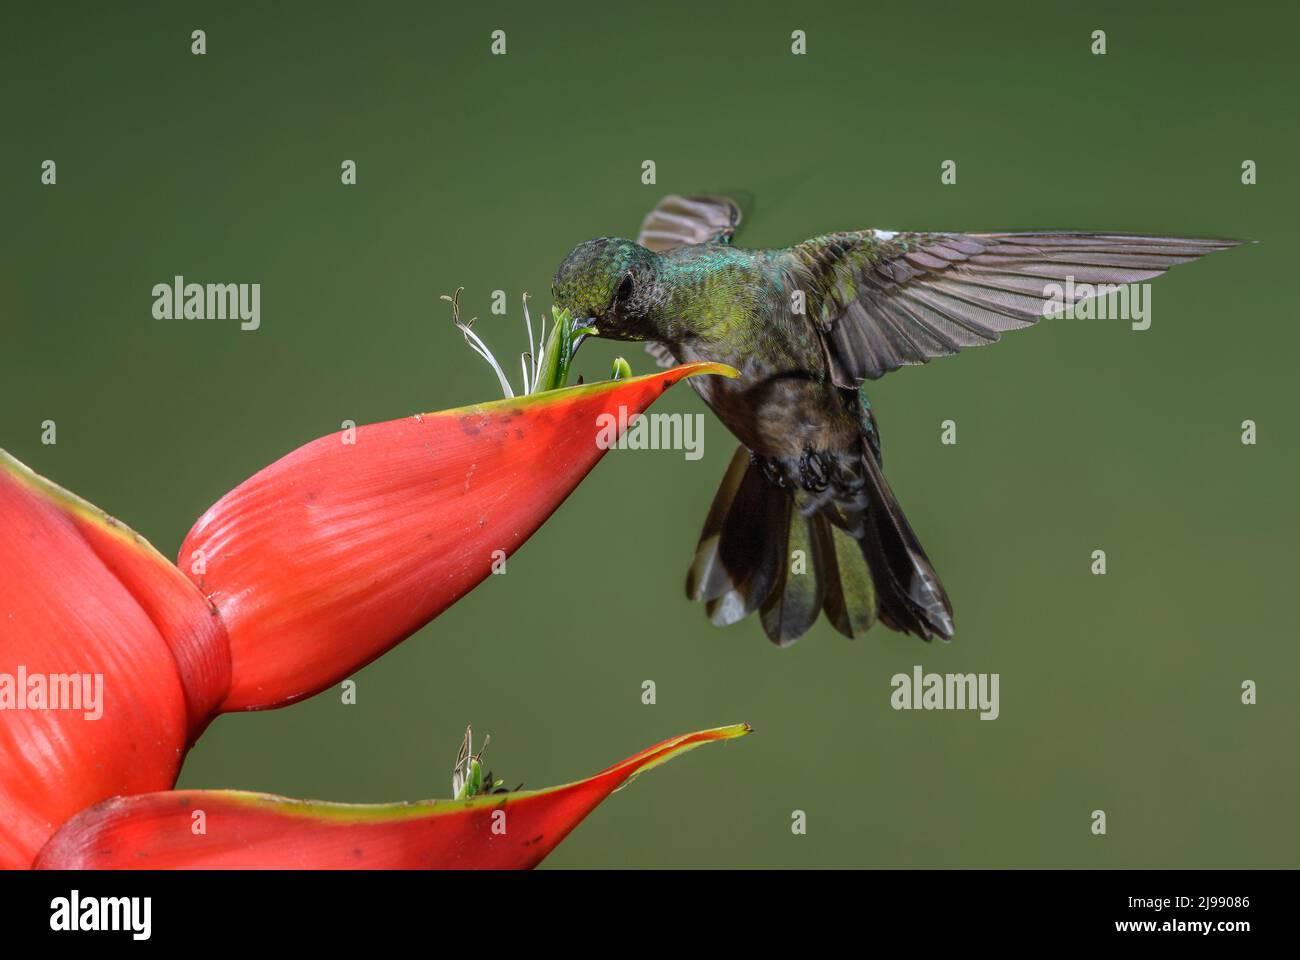 Colibrí de aire azul - Saucerottia hoffmanni, colibrí de colores hermosos de bosques y jardines de América Central, Costa Rica. Foto de stock